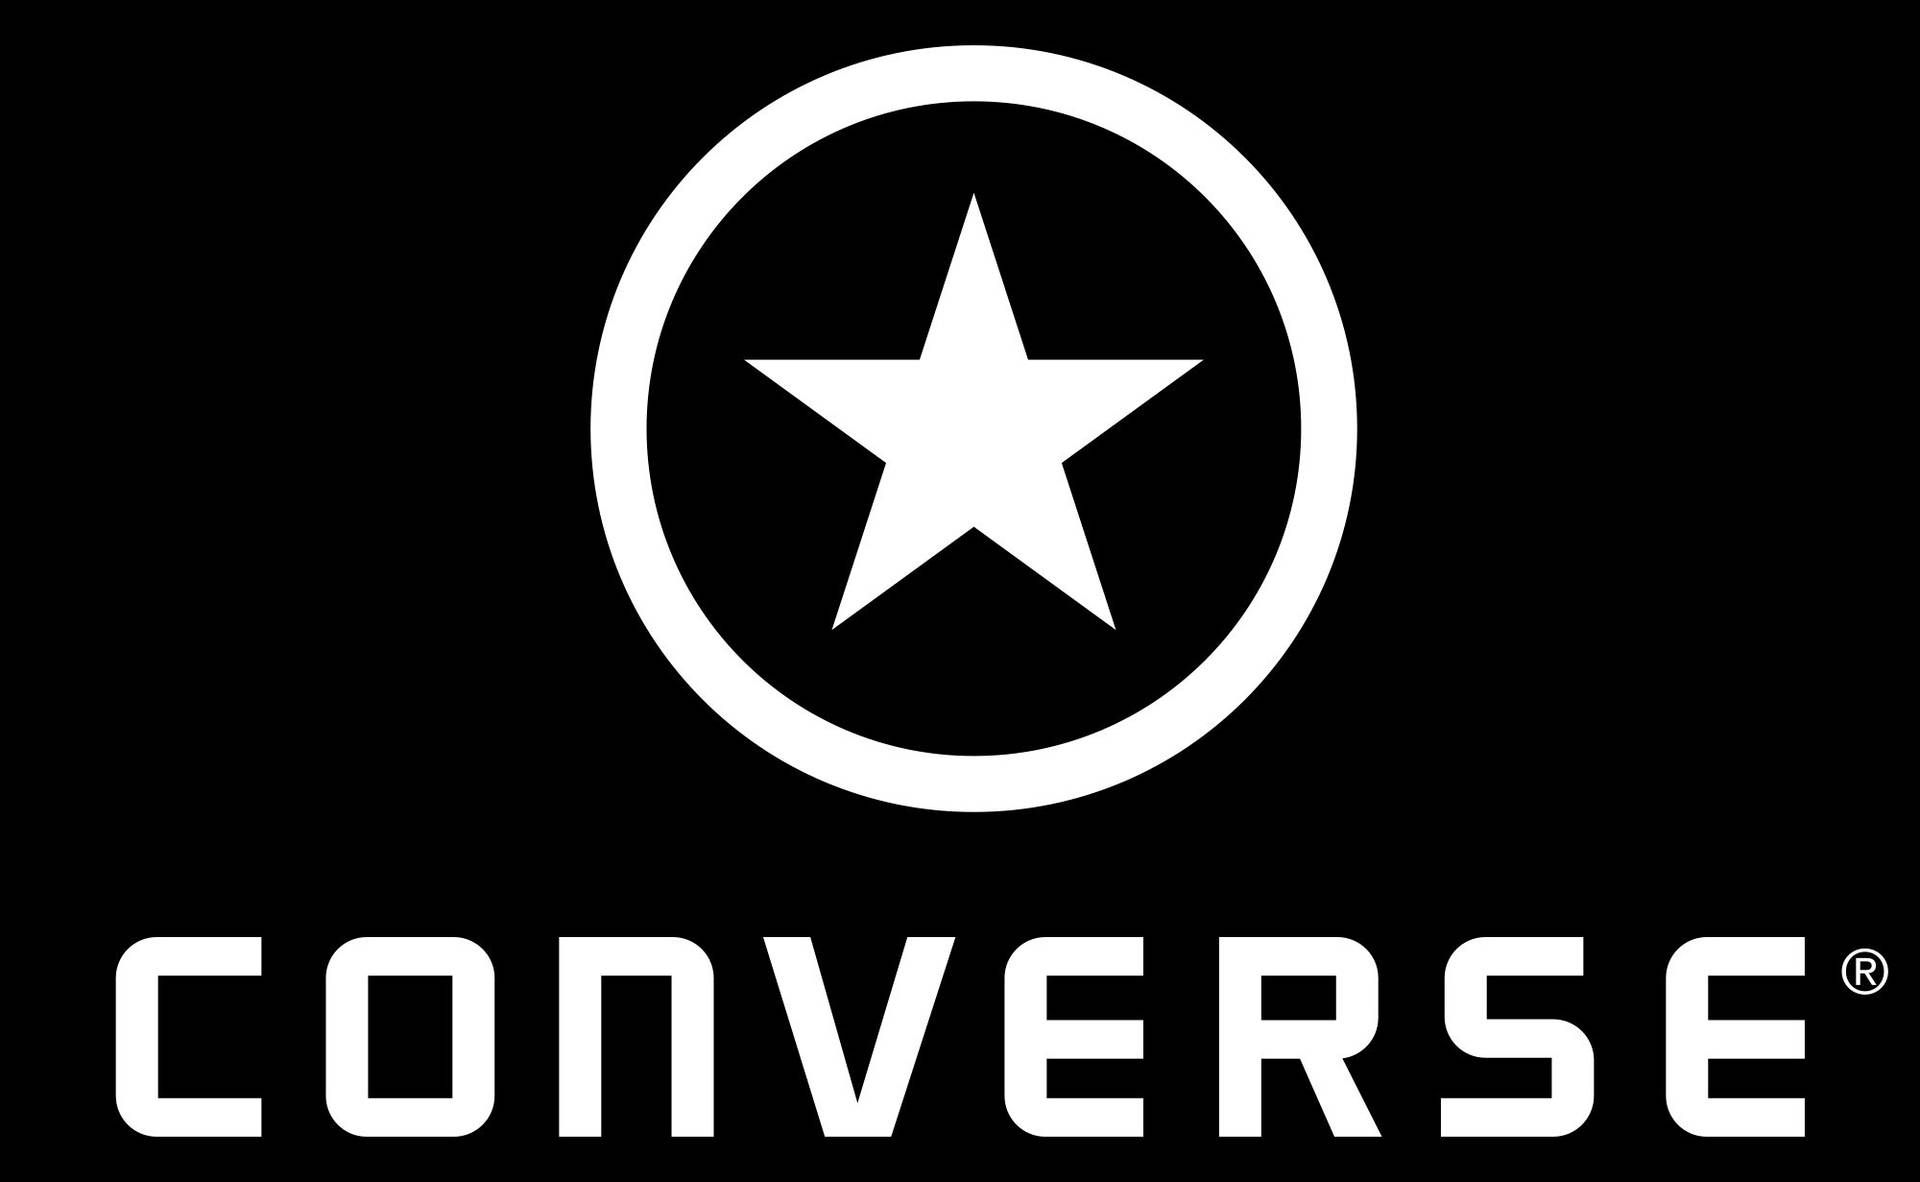 2003 White Converse Logo